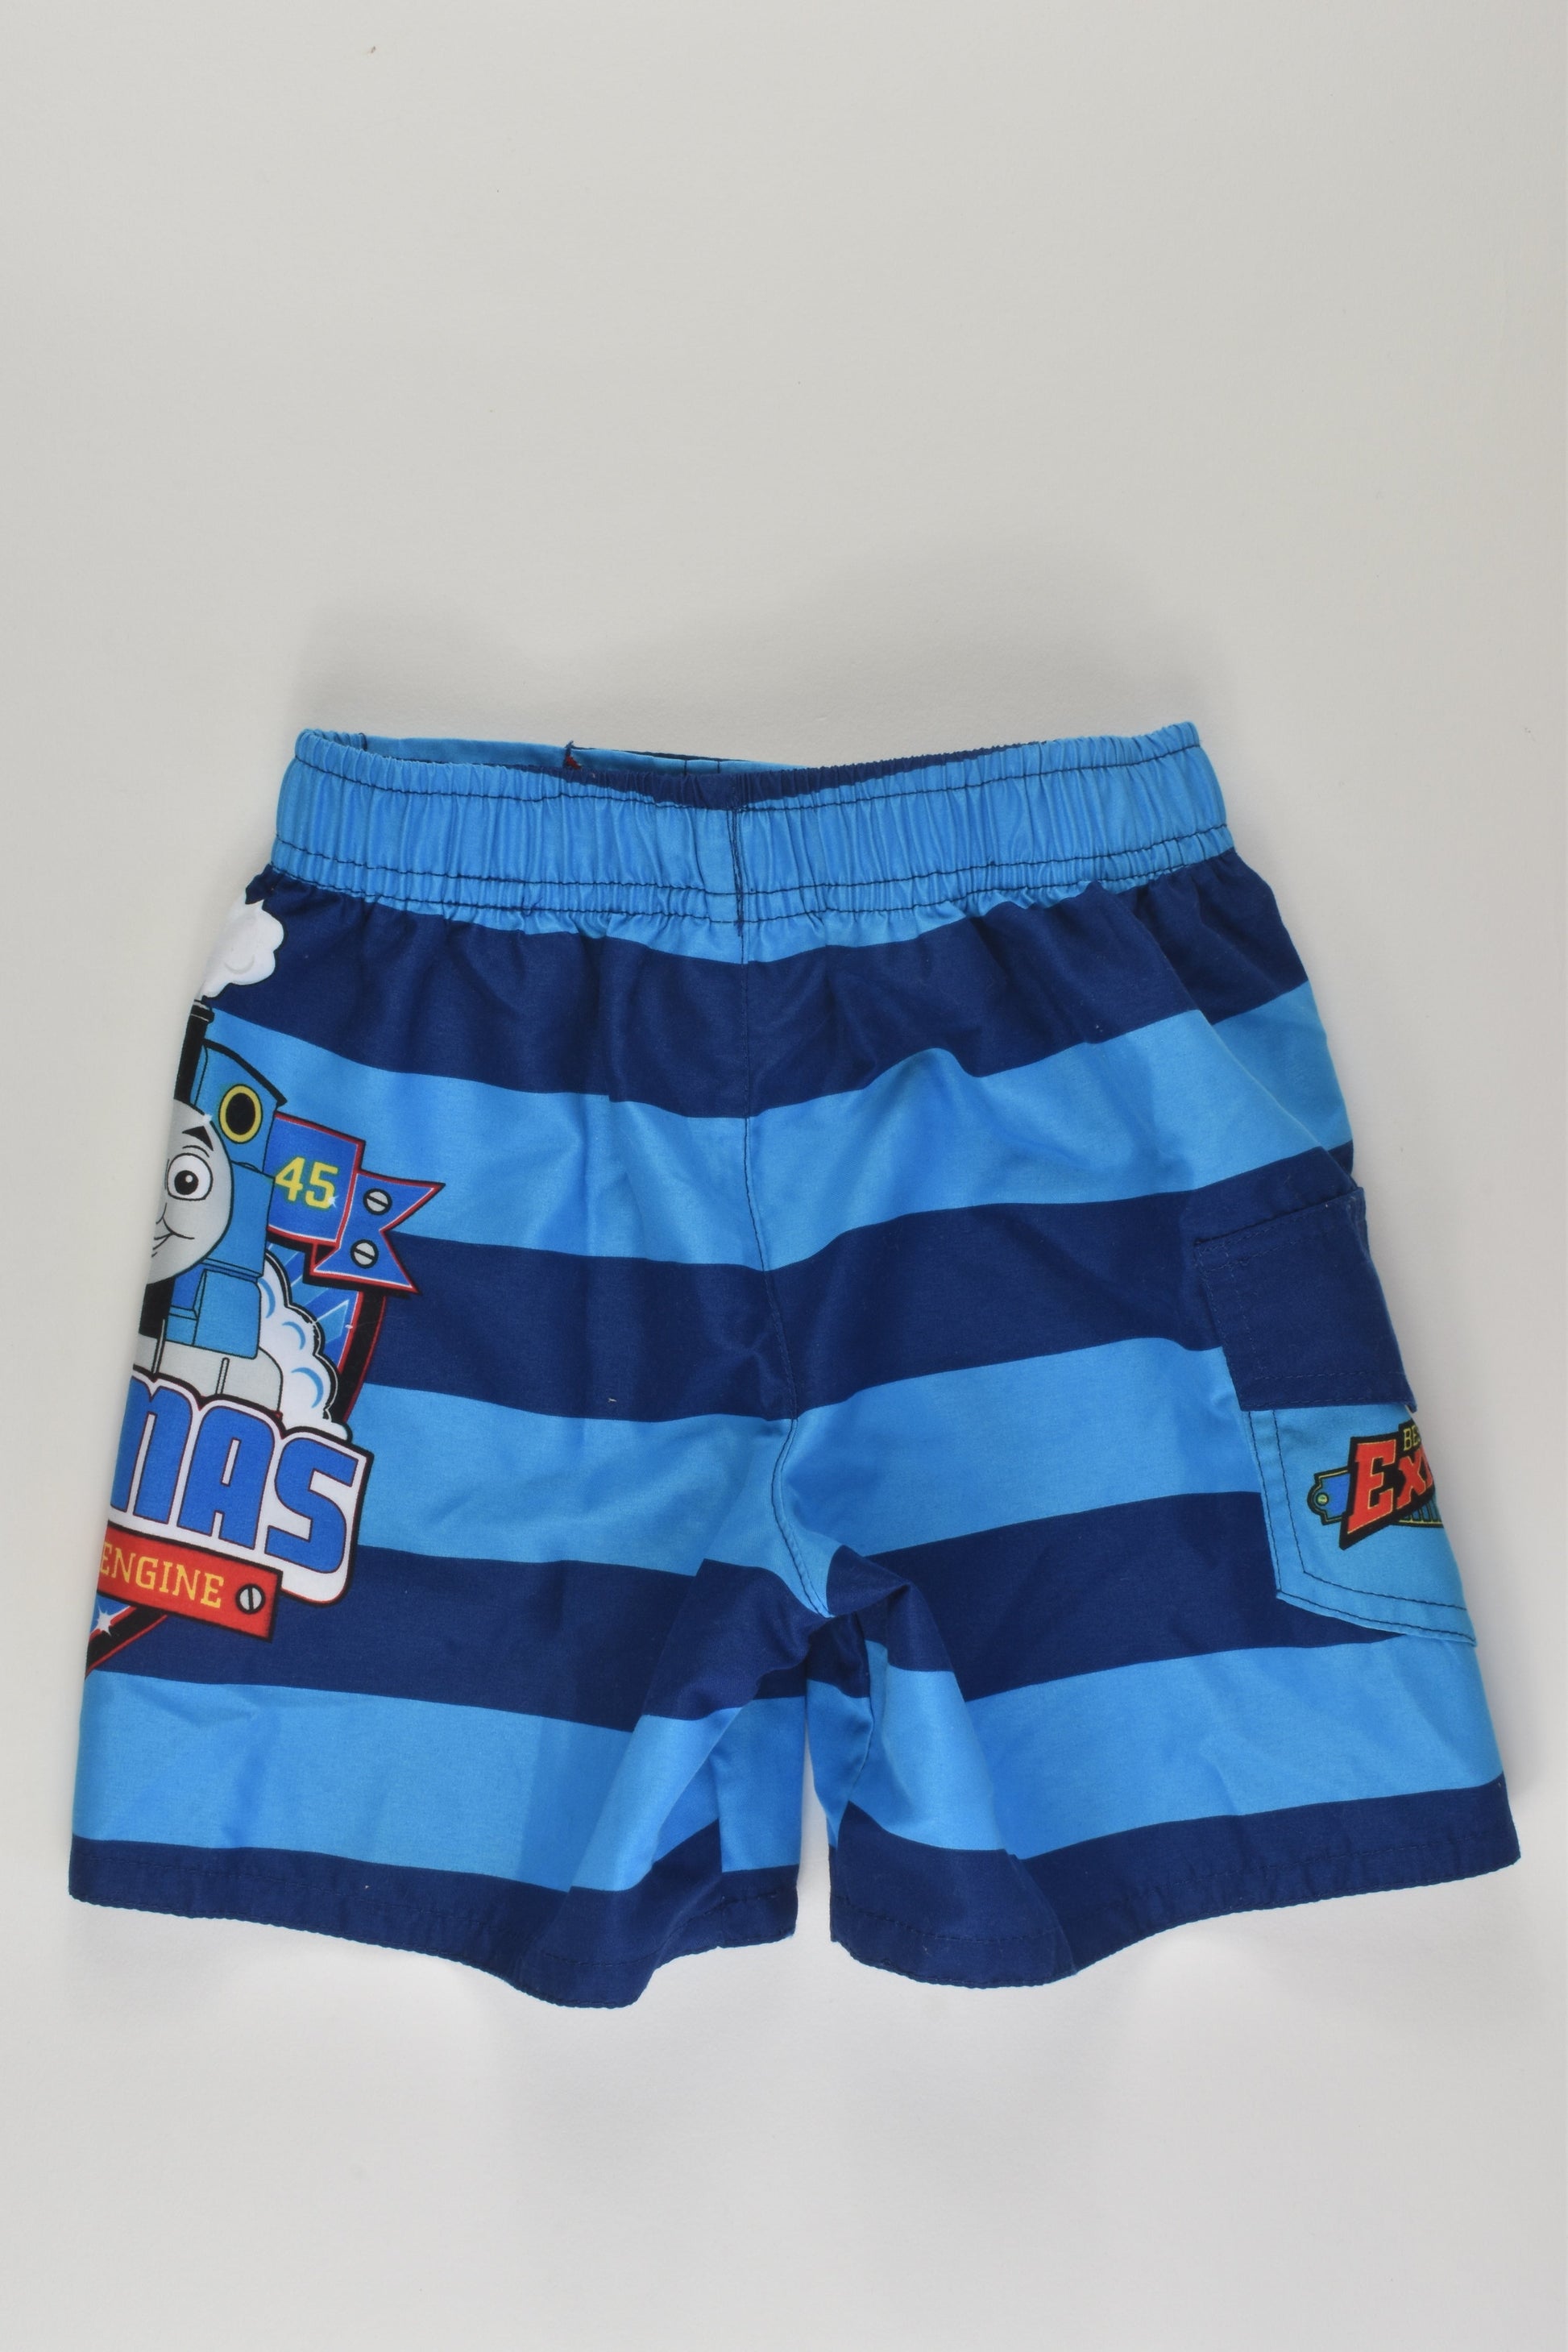 Thomas & Friends Size 1 Board Shorts